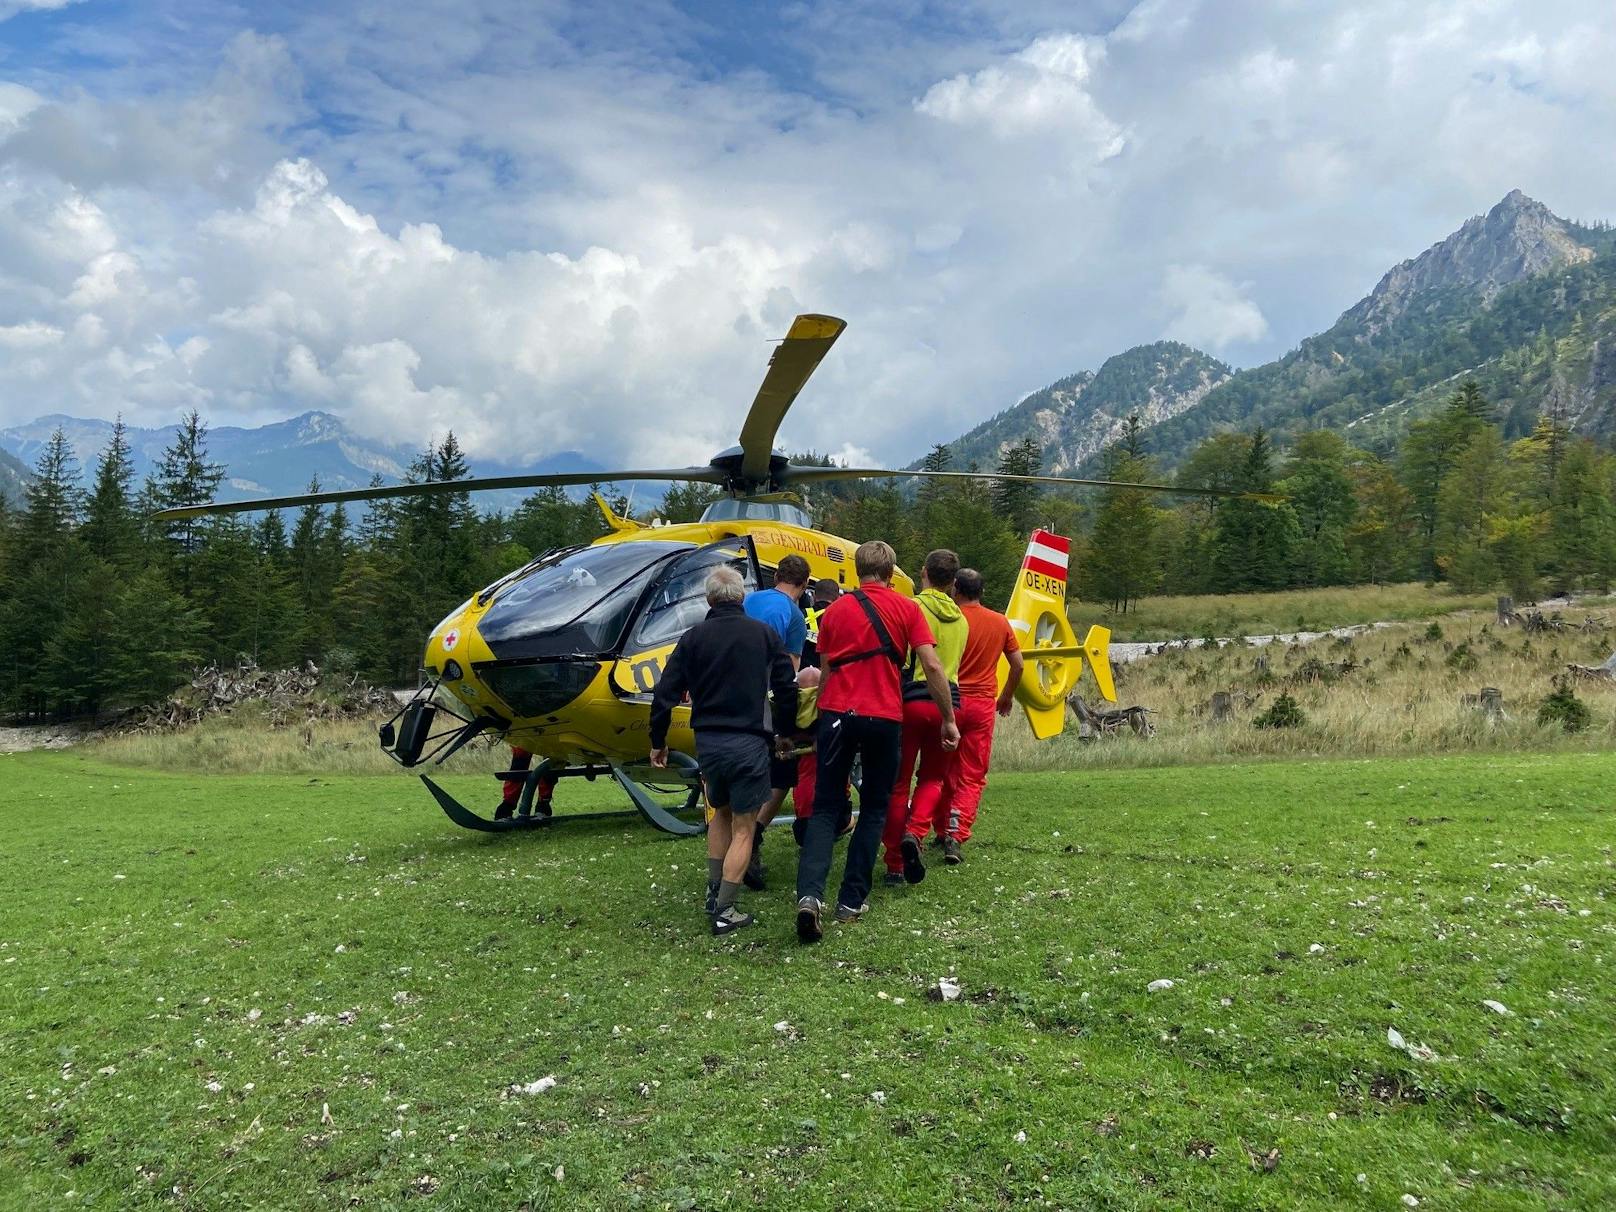 Bergretter bringen den Verletzten zum Hubschrauber.